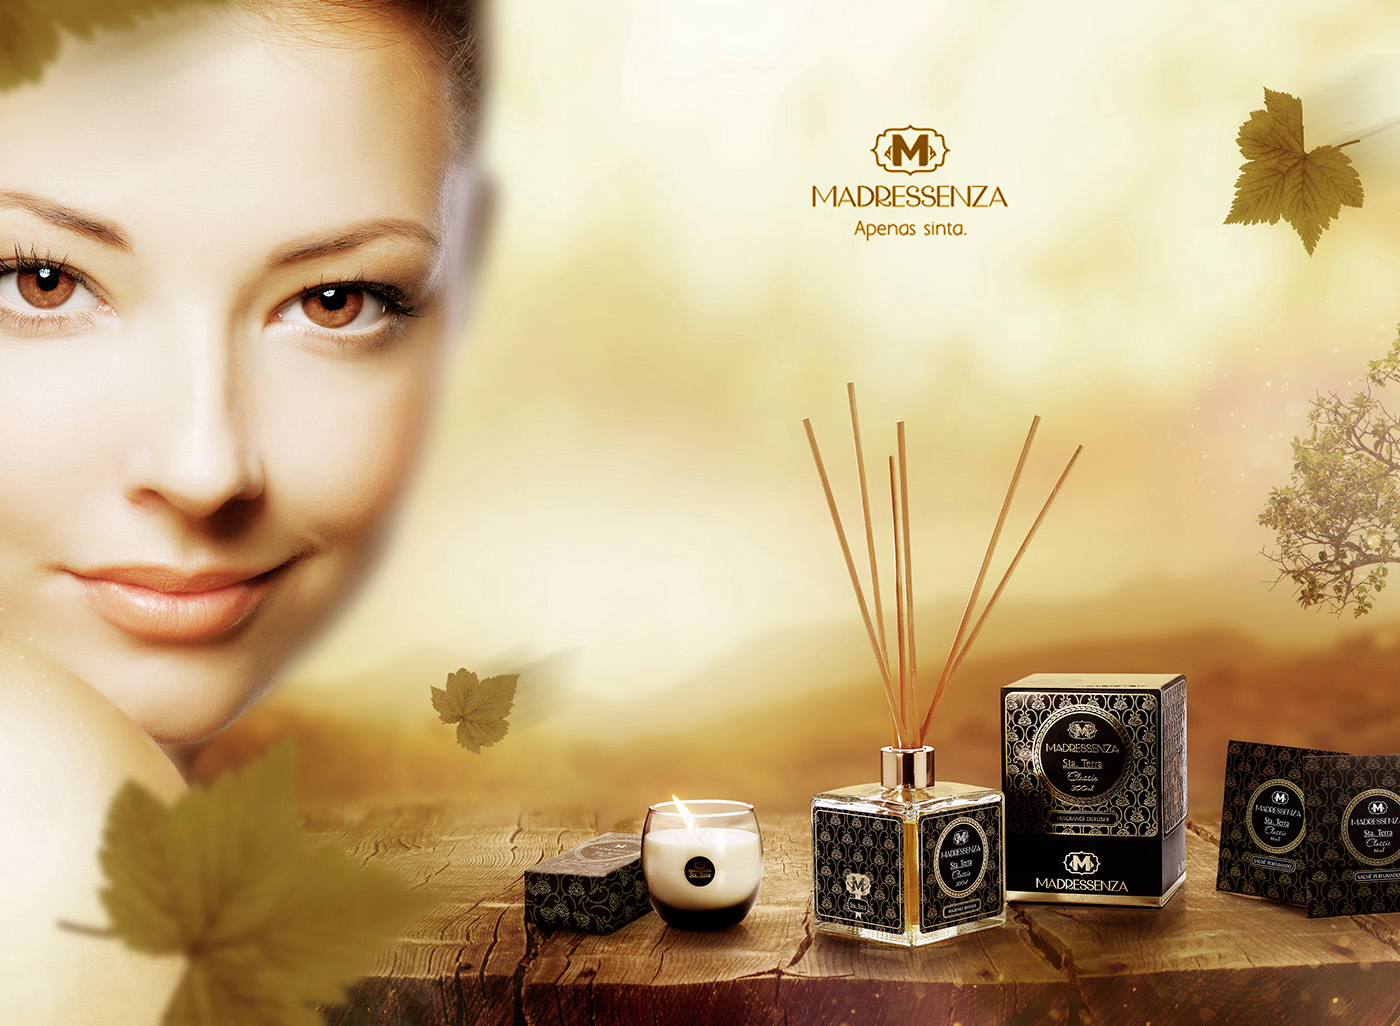 Fotografía Digital Tratamento de imagens retoque de imagens fotografia publicitaria Perfumes aromas